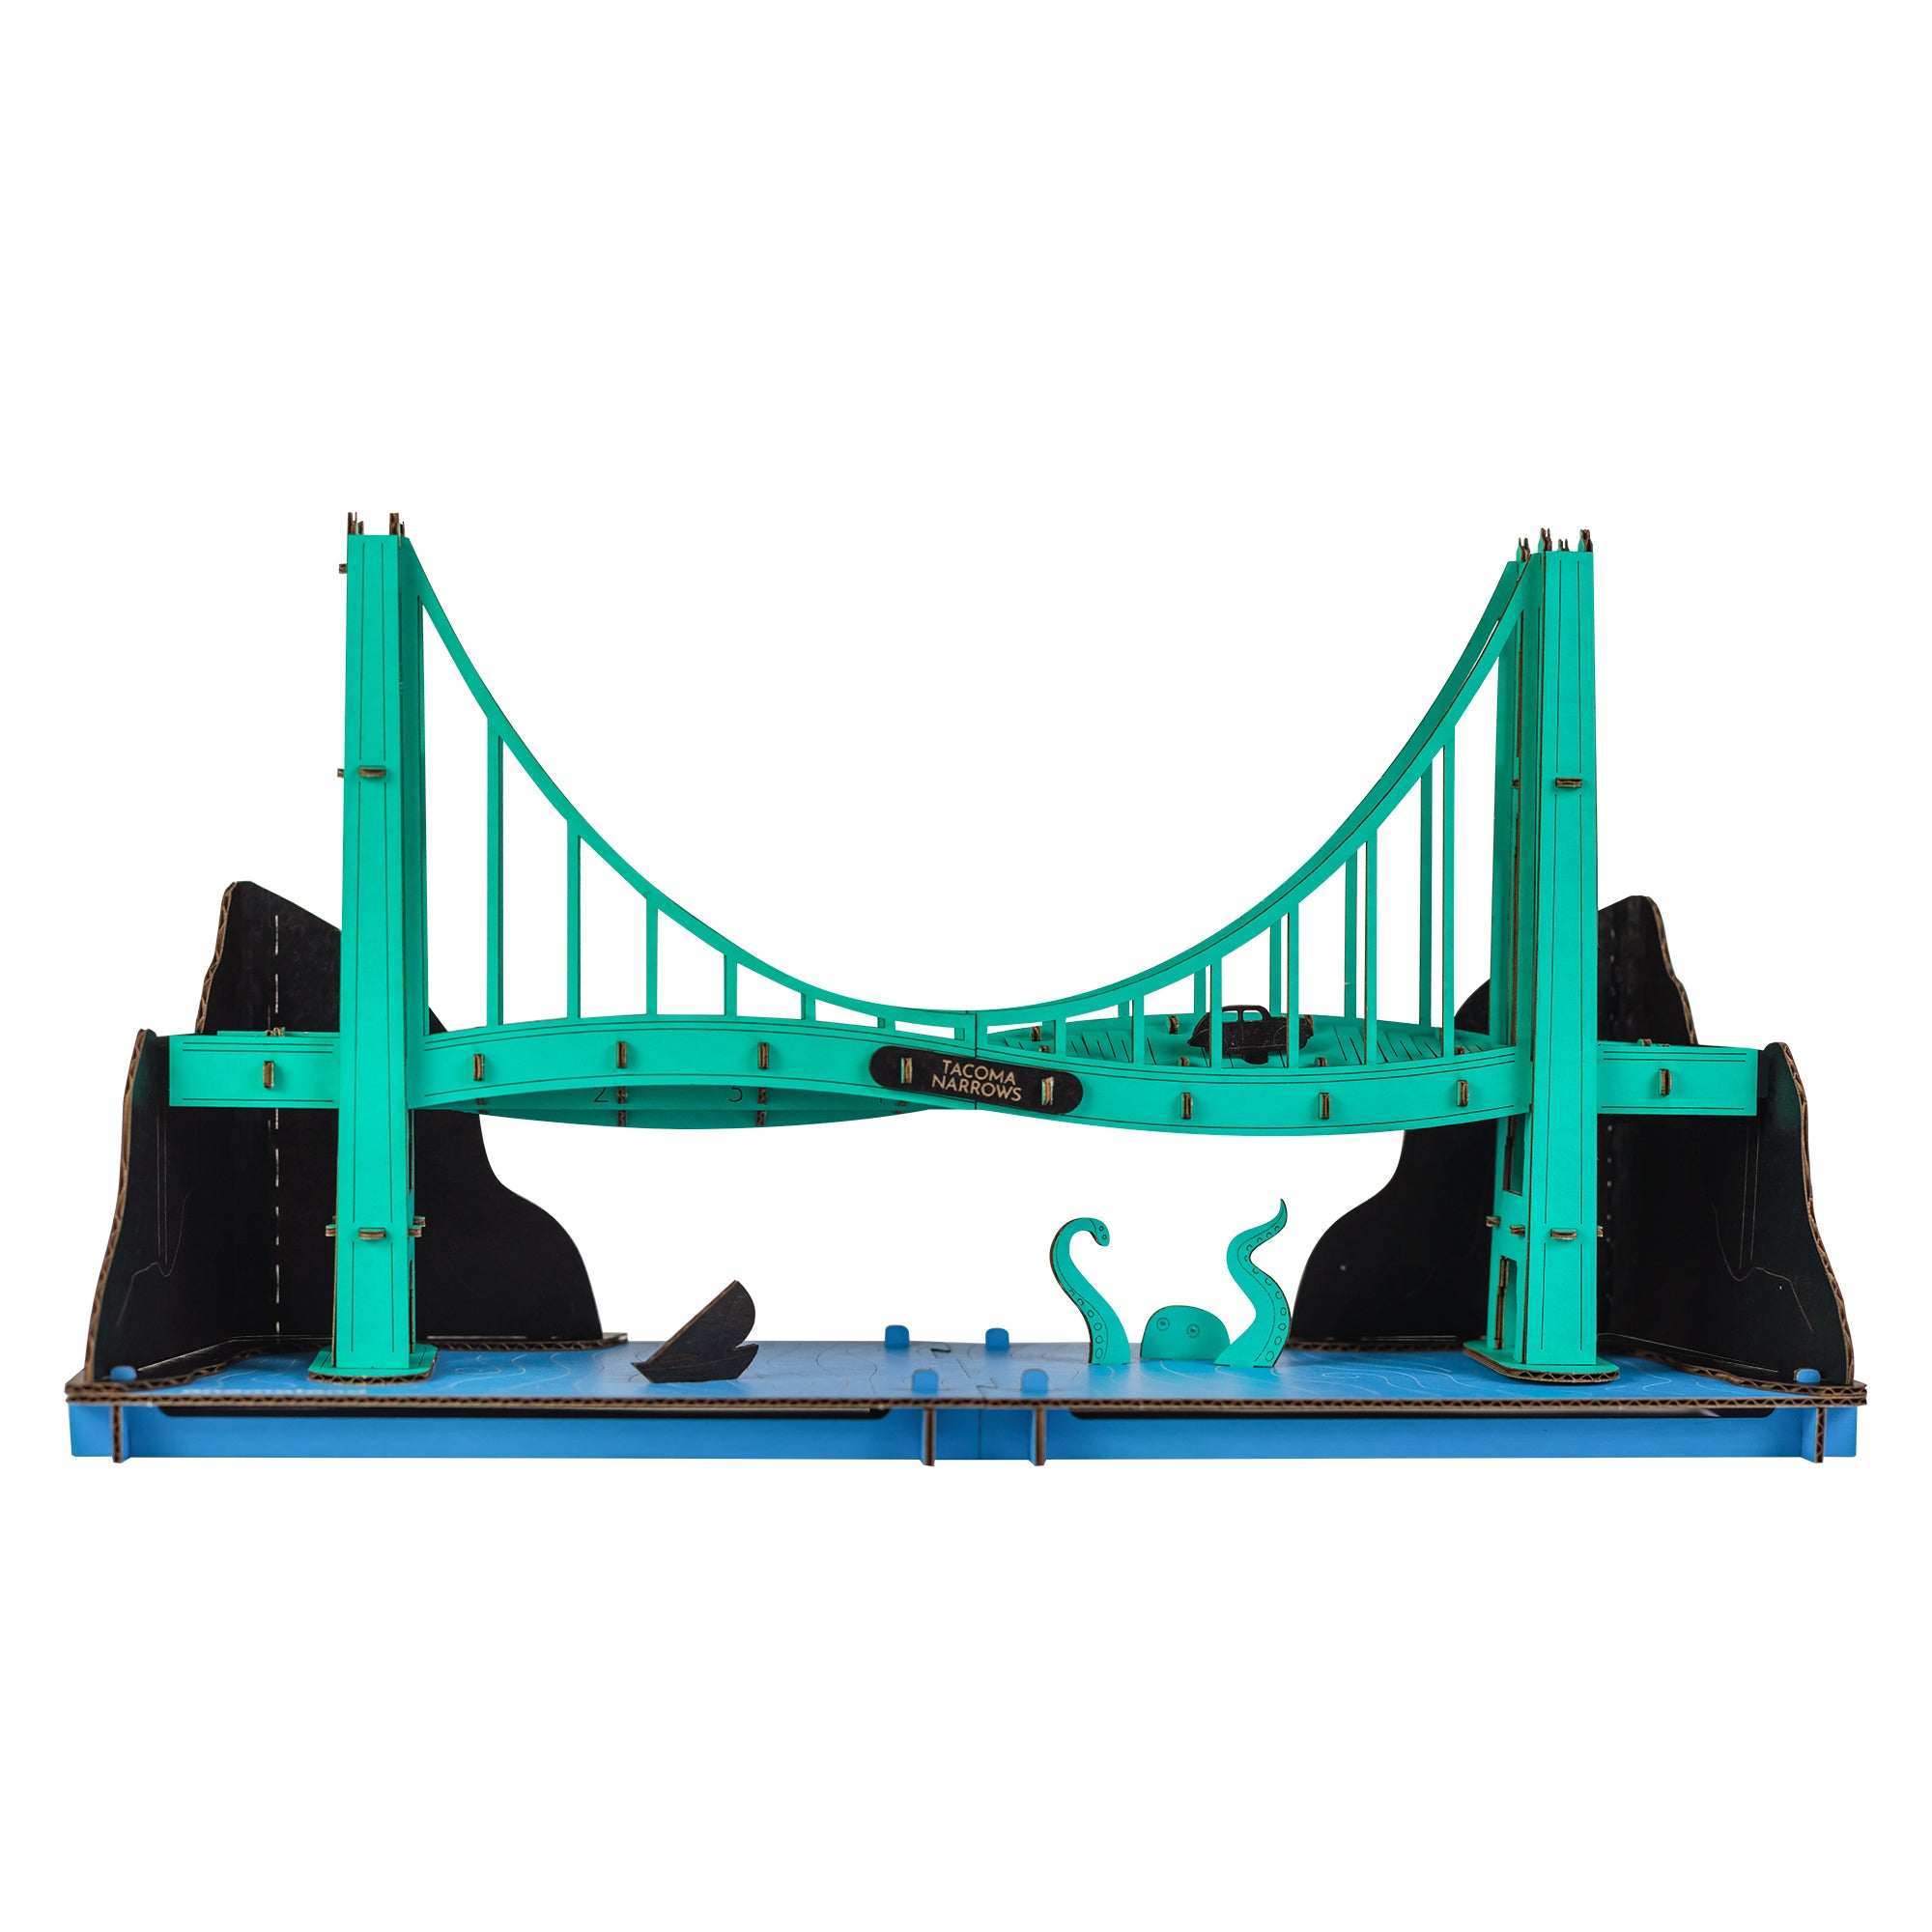 Anomaland Tacoma Narrows Bridge Model Front View showing the green bridge self-destructing.